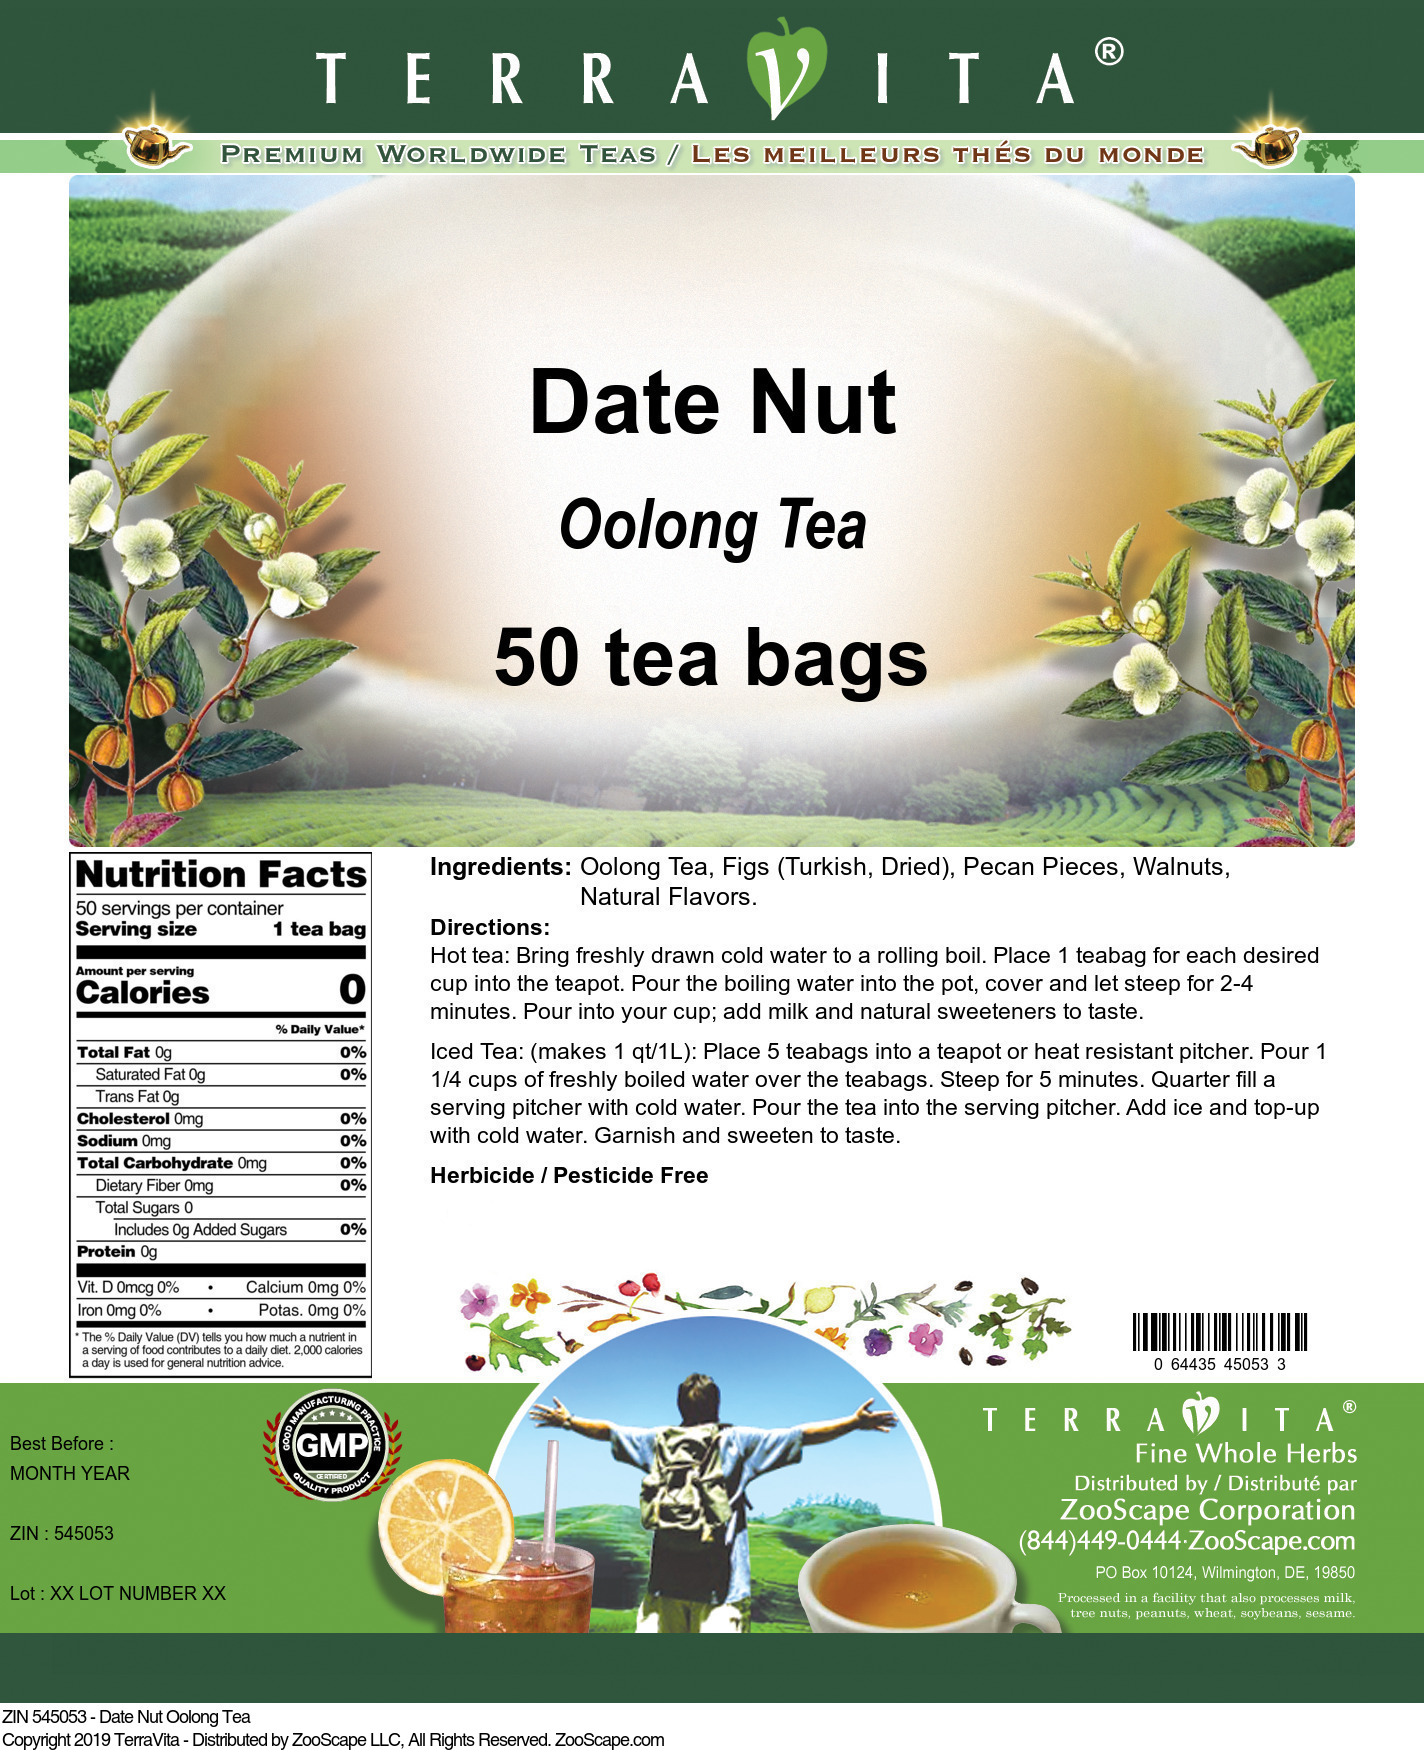 Date Nut Oolong Tea - Label